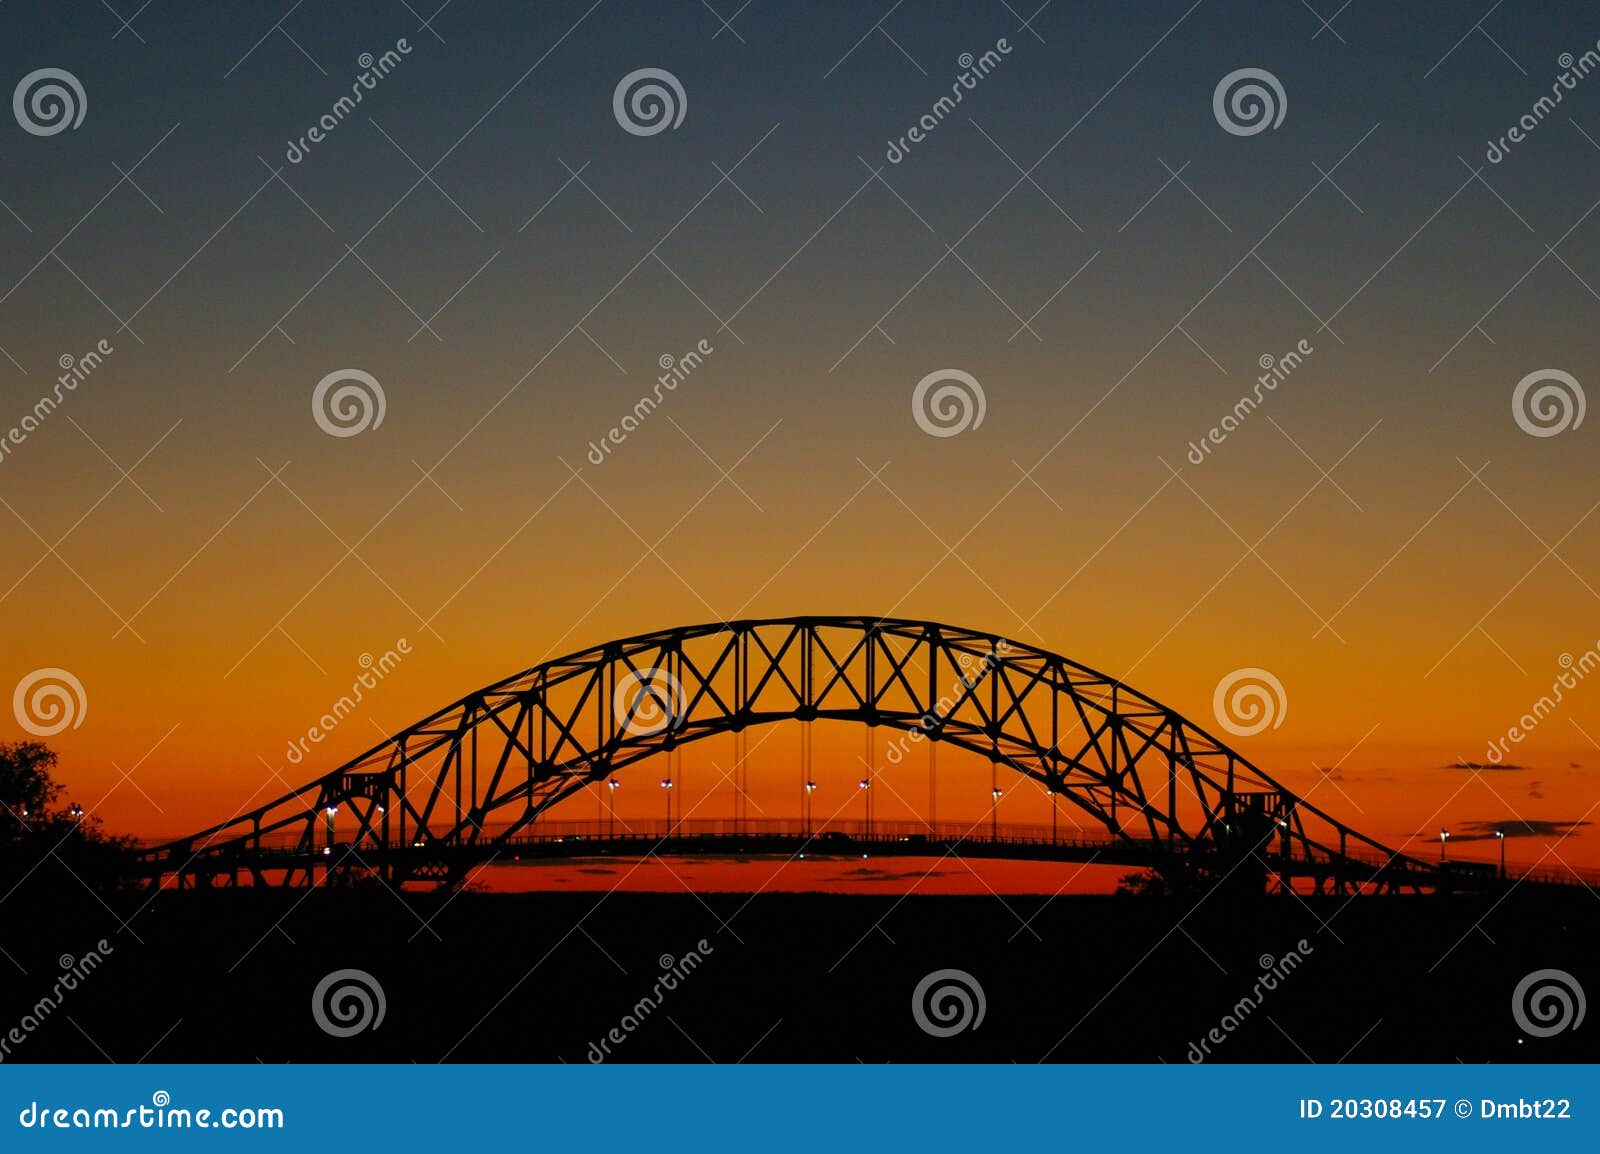 bourne bridge at sunset